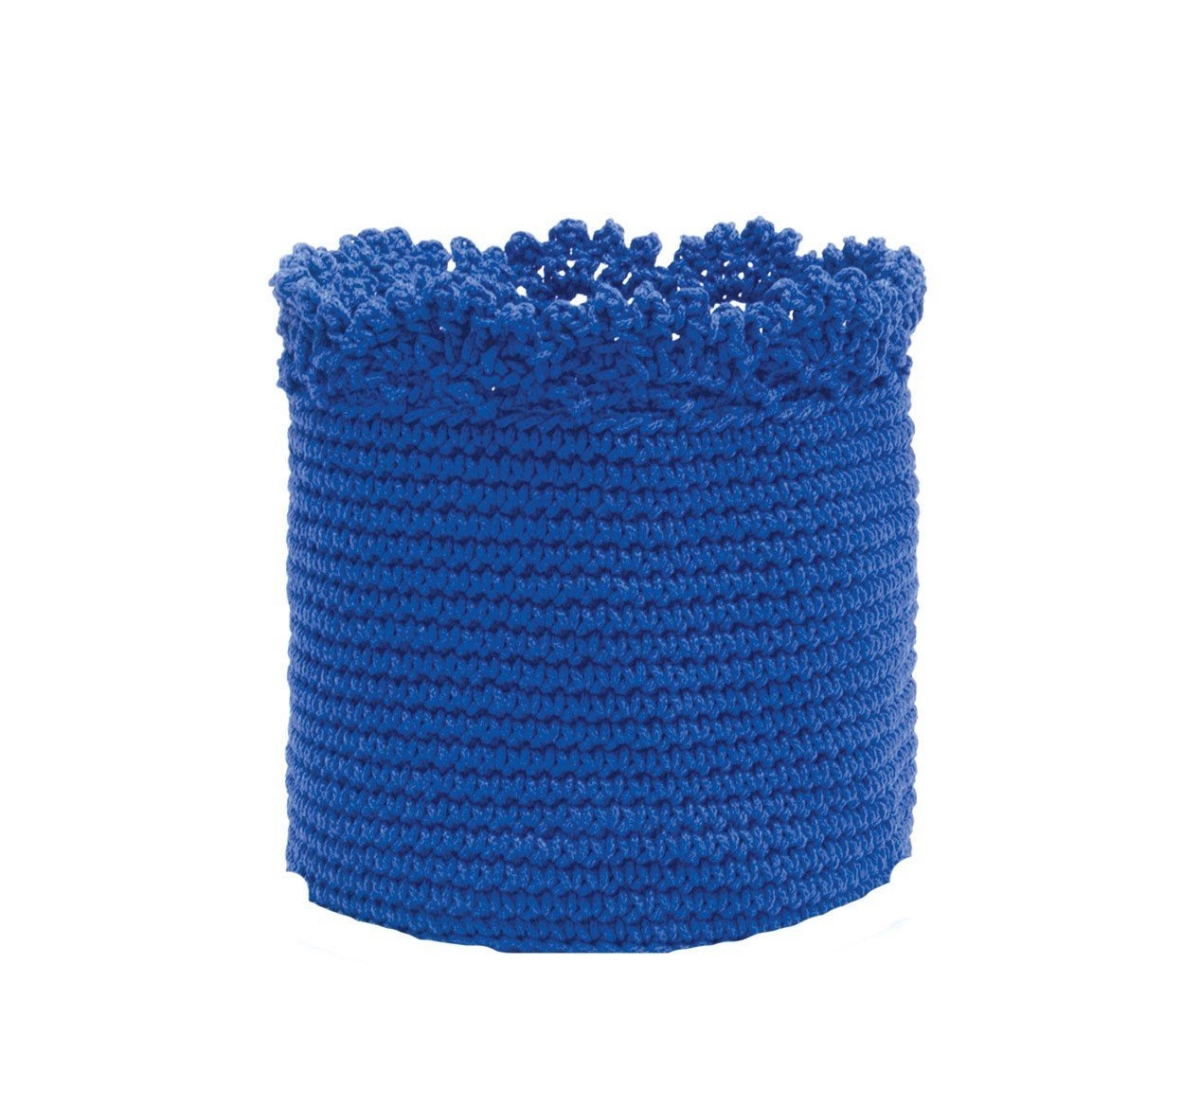 Mc-1065cb 6 X 6 In. Mode Crochet Basket With Trim, Cobalt Blue